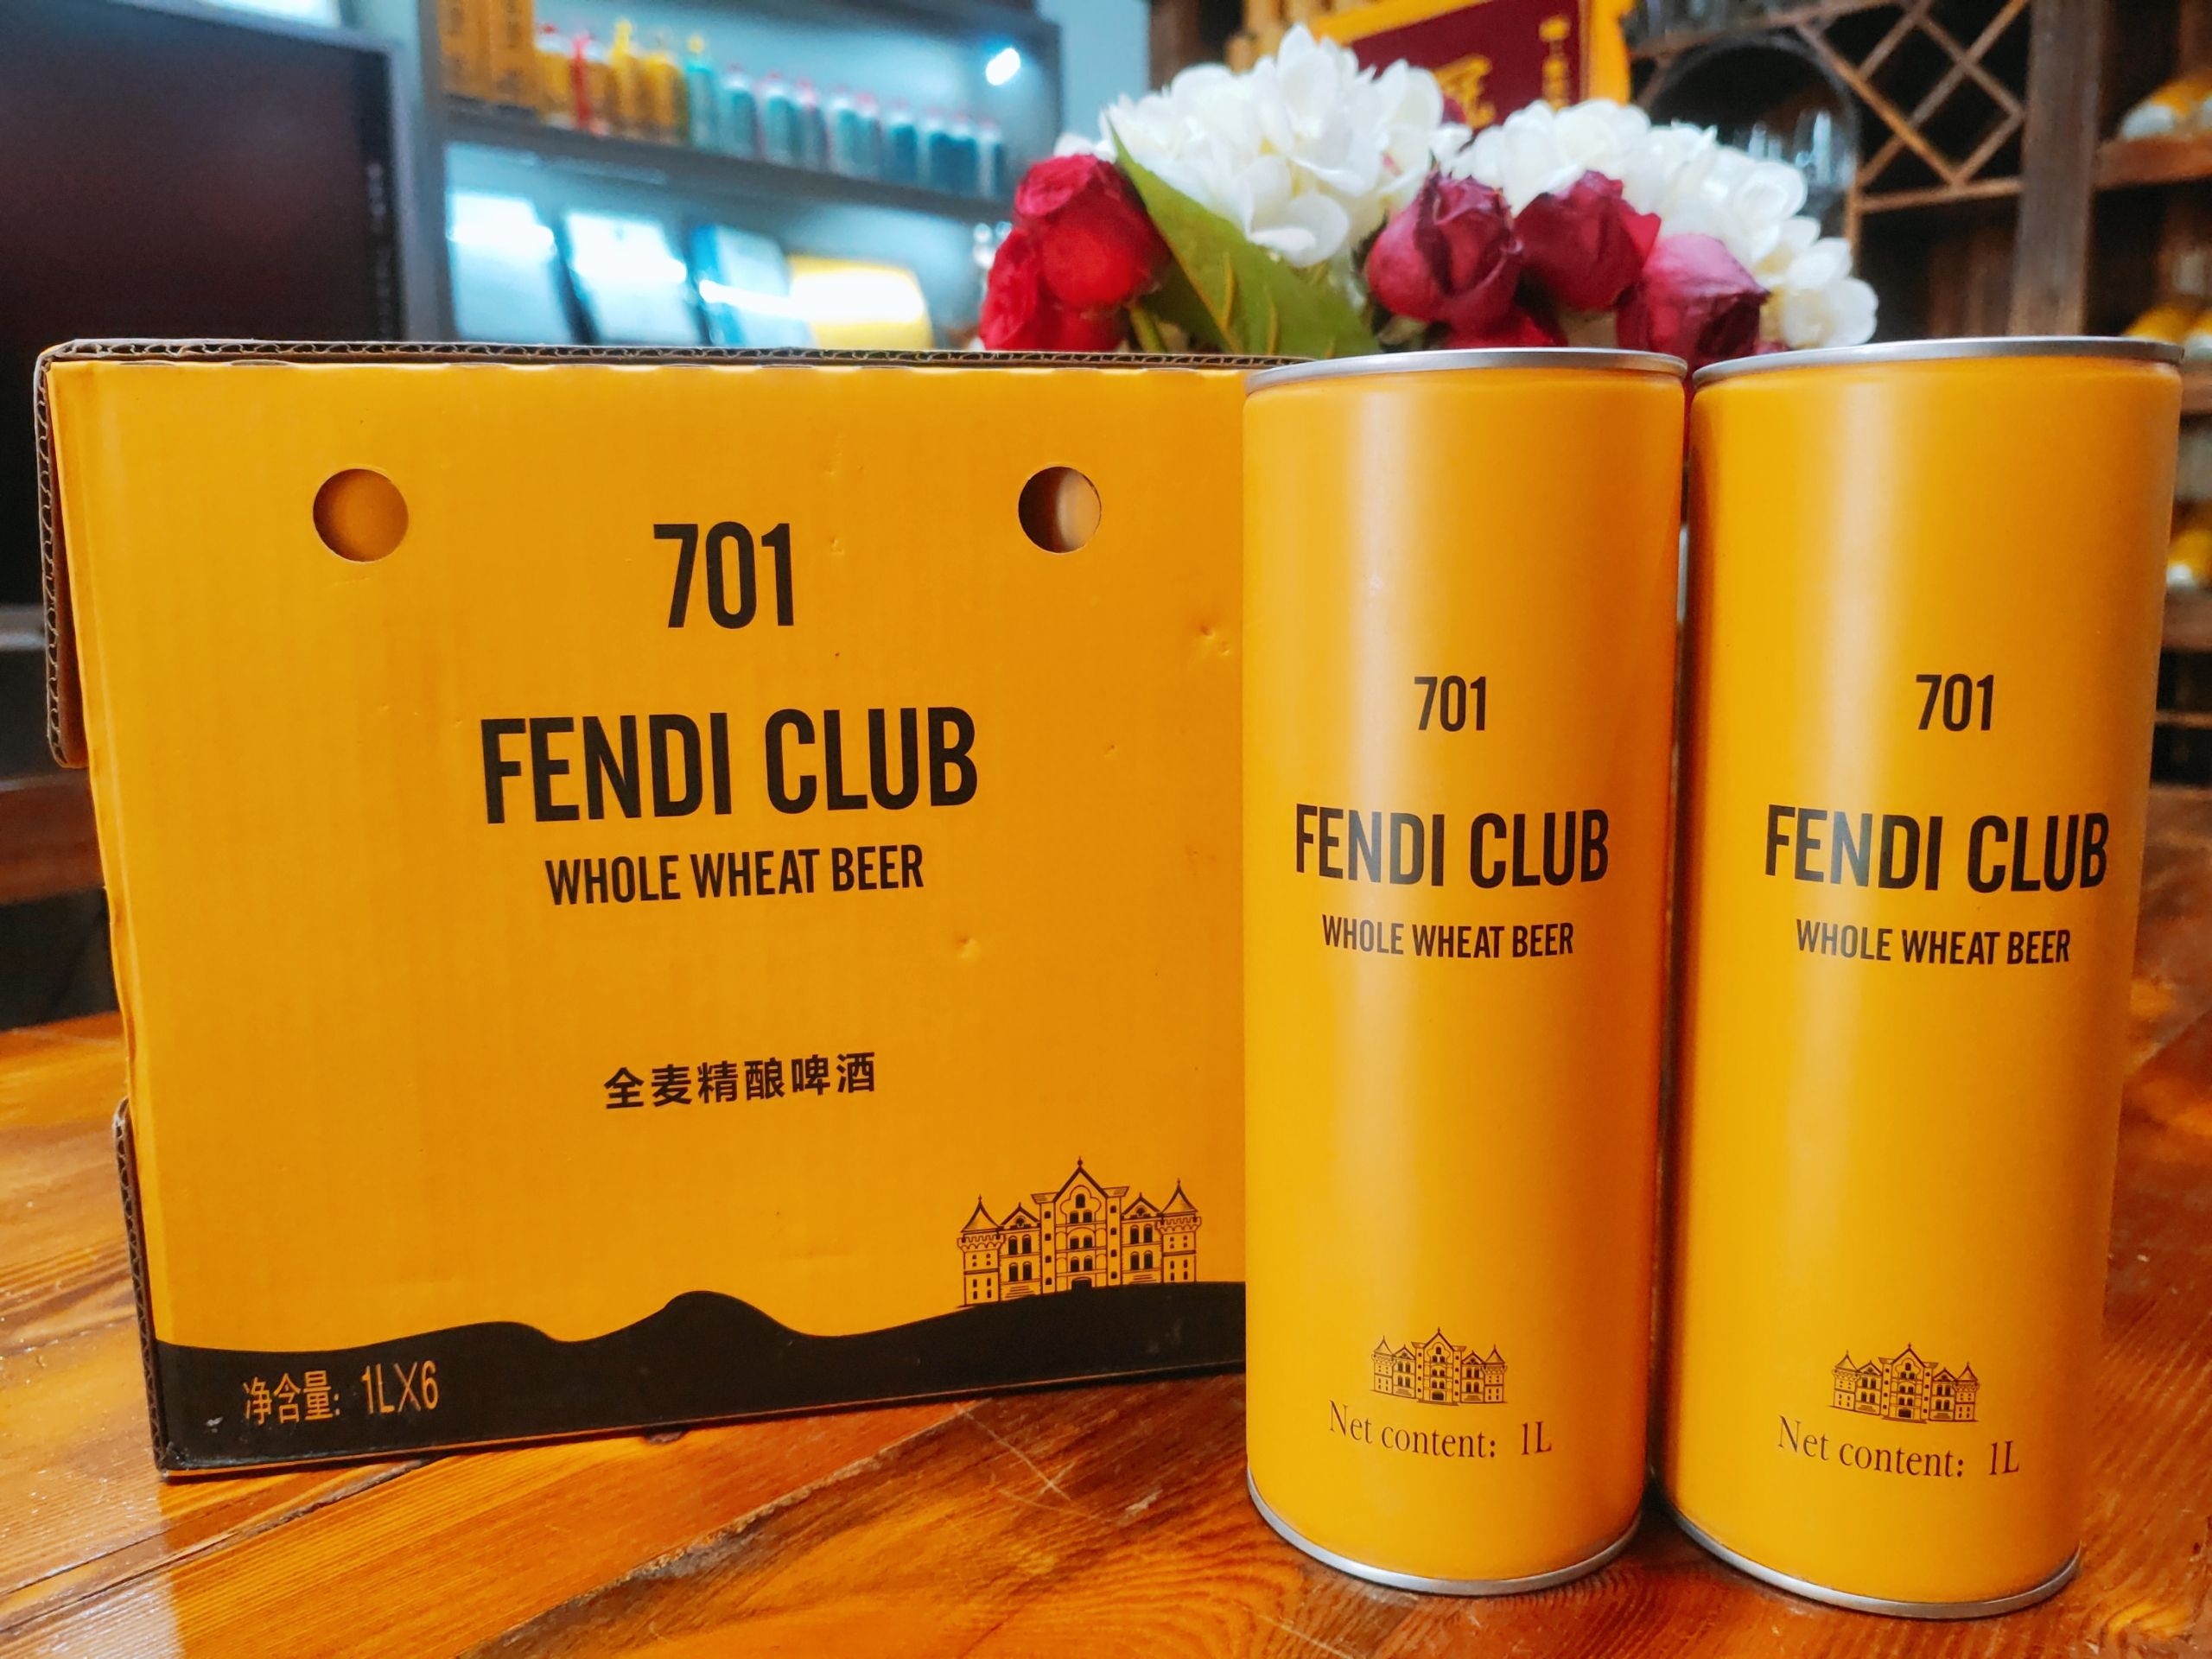 FENDI CLUB分享精酿啤酒的“淡爽型”和“醇厚型”